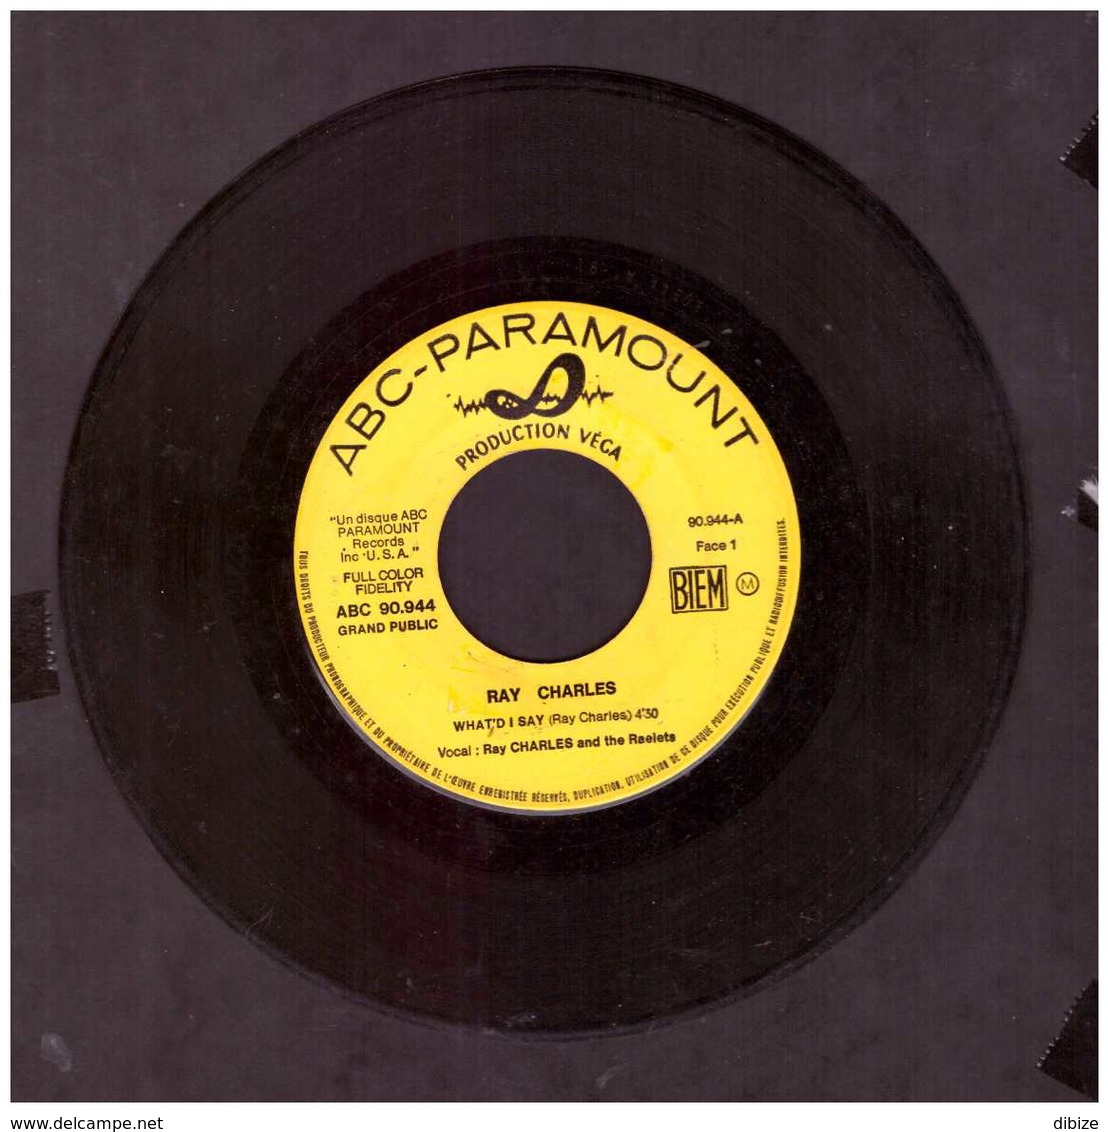 45 Rpm Vinyl Record. Ray Charles. Music Of The Film : The Cincinnati Kid. Average State. - Soundtracks, Film Music